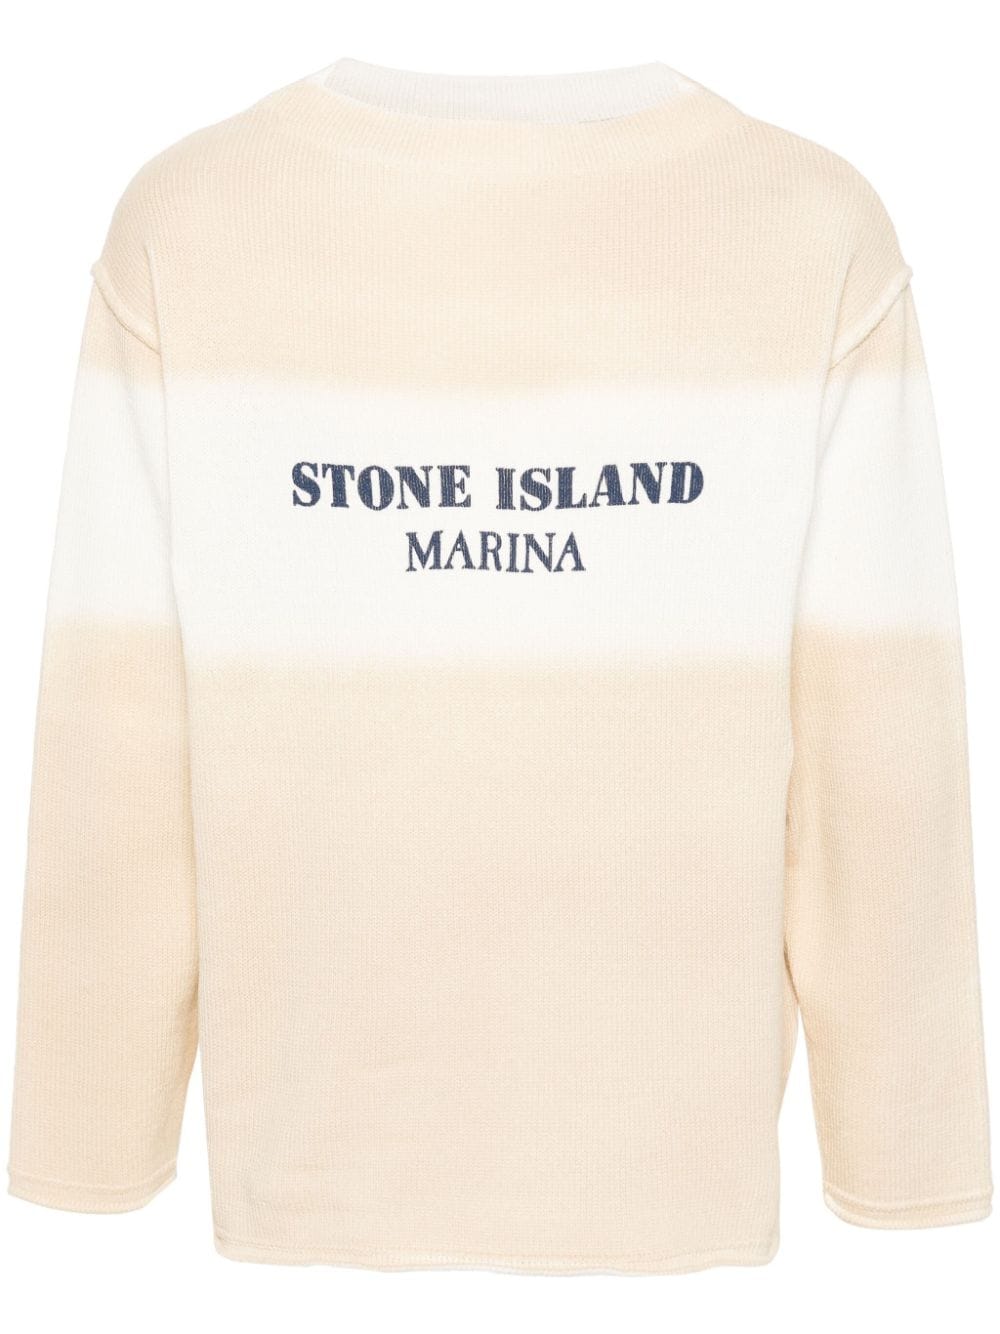 Stone Island STONE ISLAND- Marina Cotton Sweater